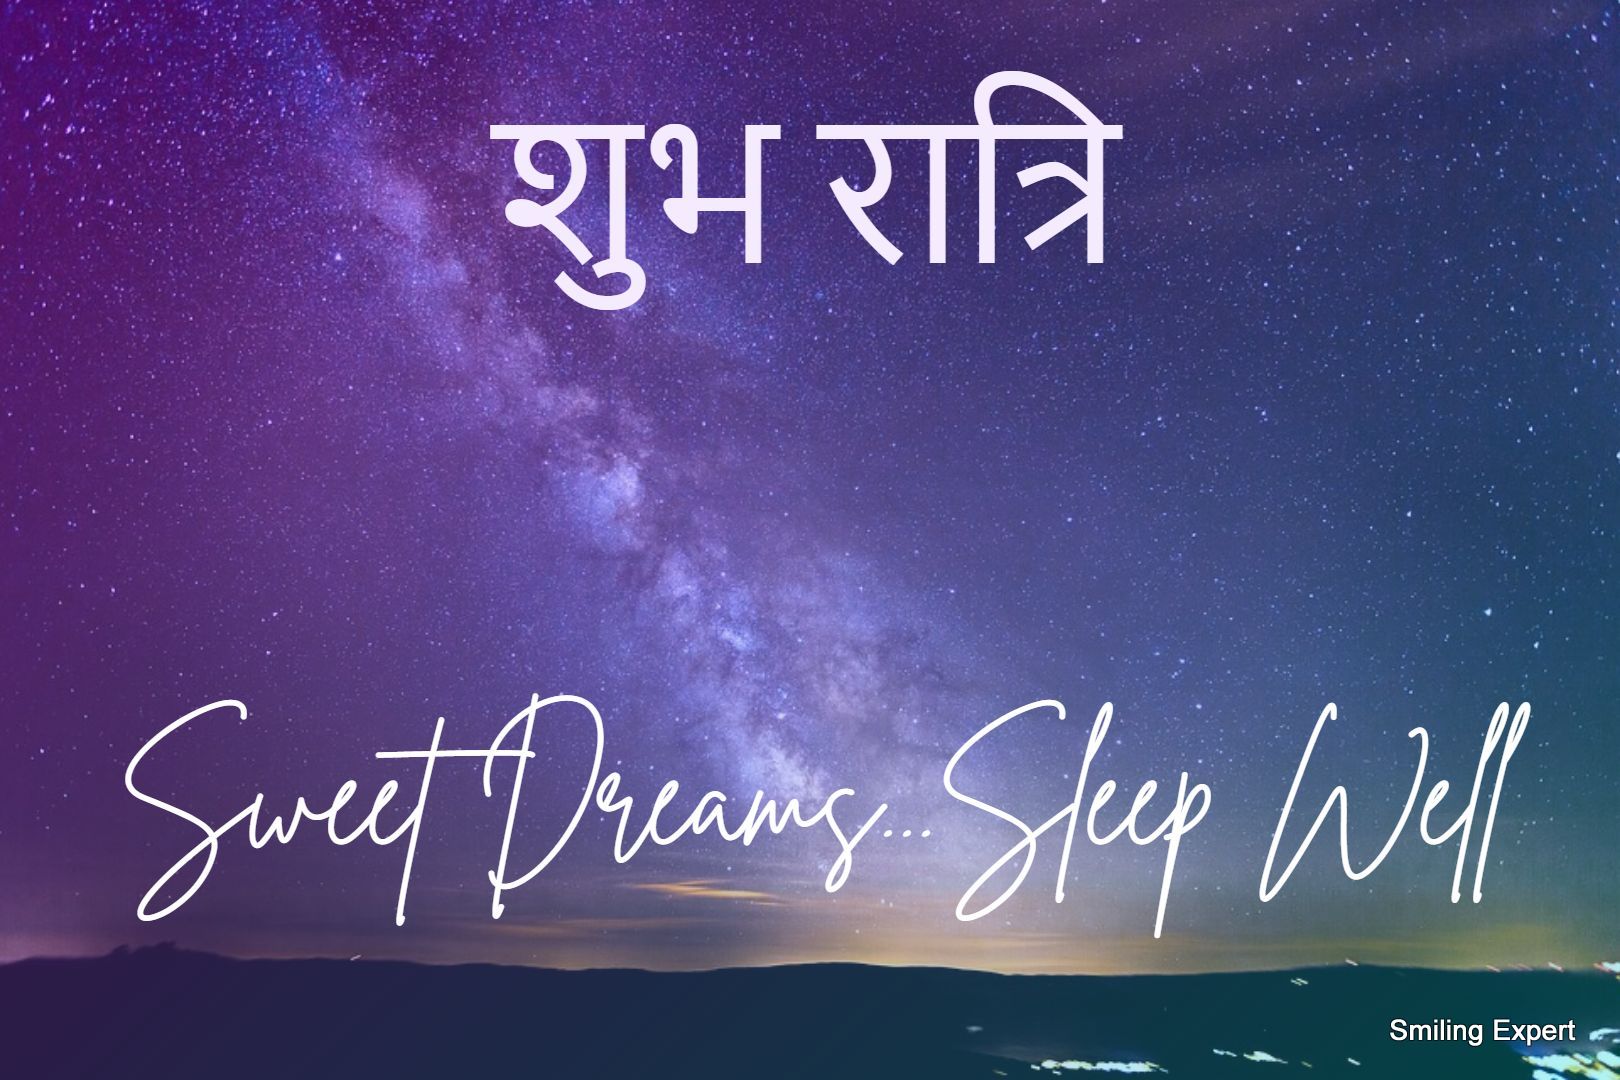 Good Night message in Hindi